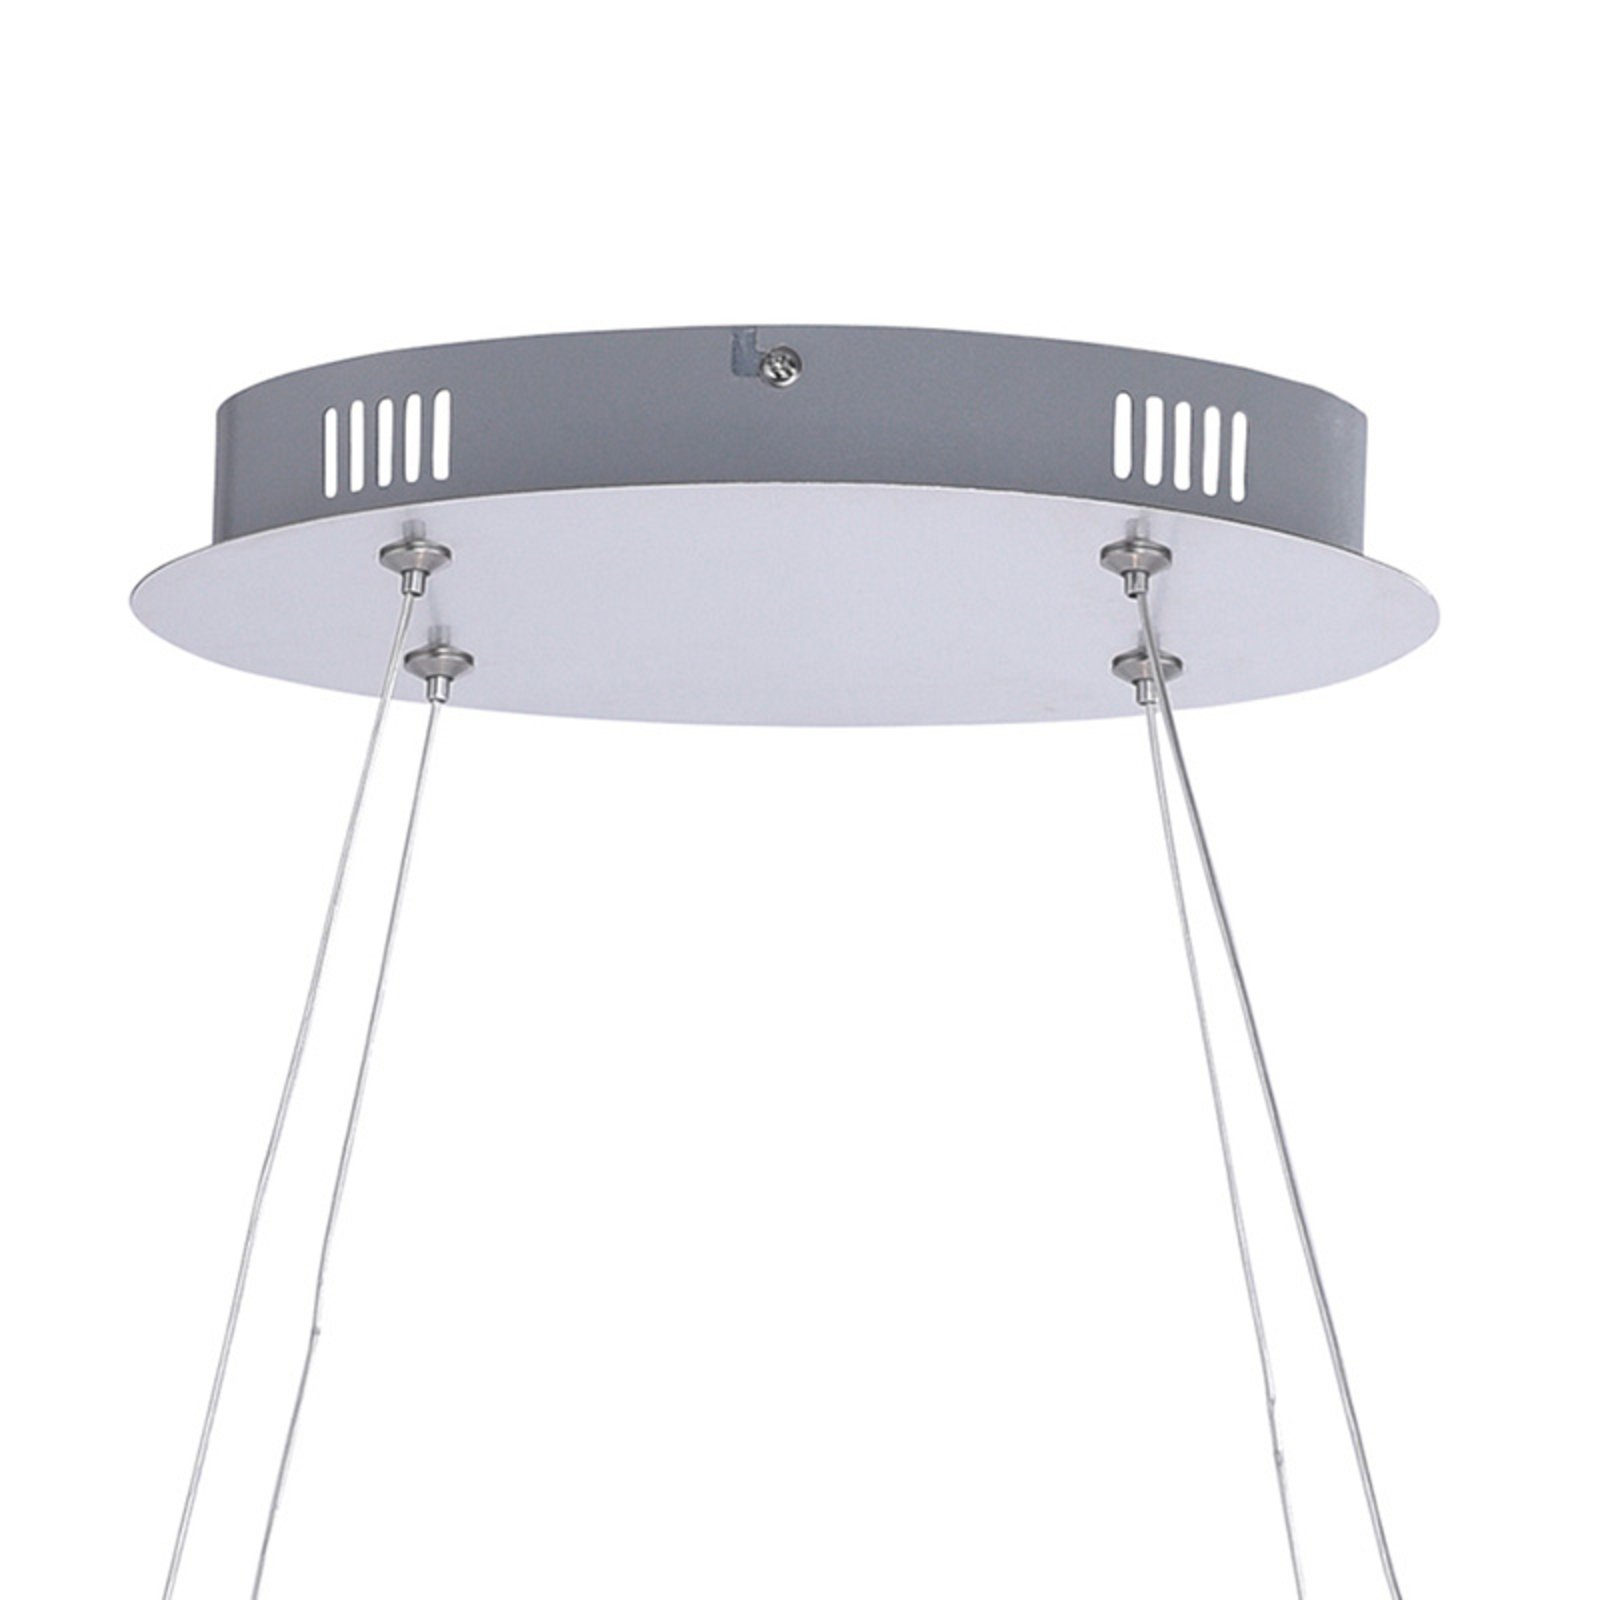 LED hanglamp Melinda, 38W, dimbaar, staalgrijs